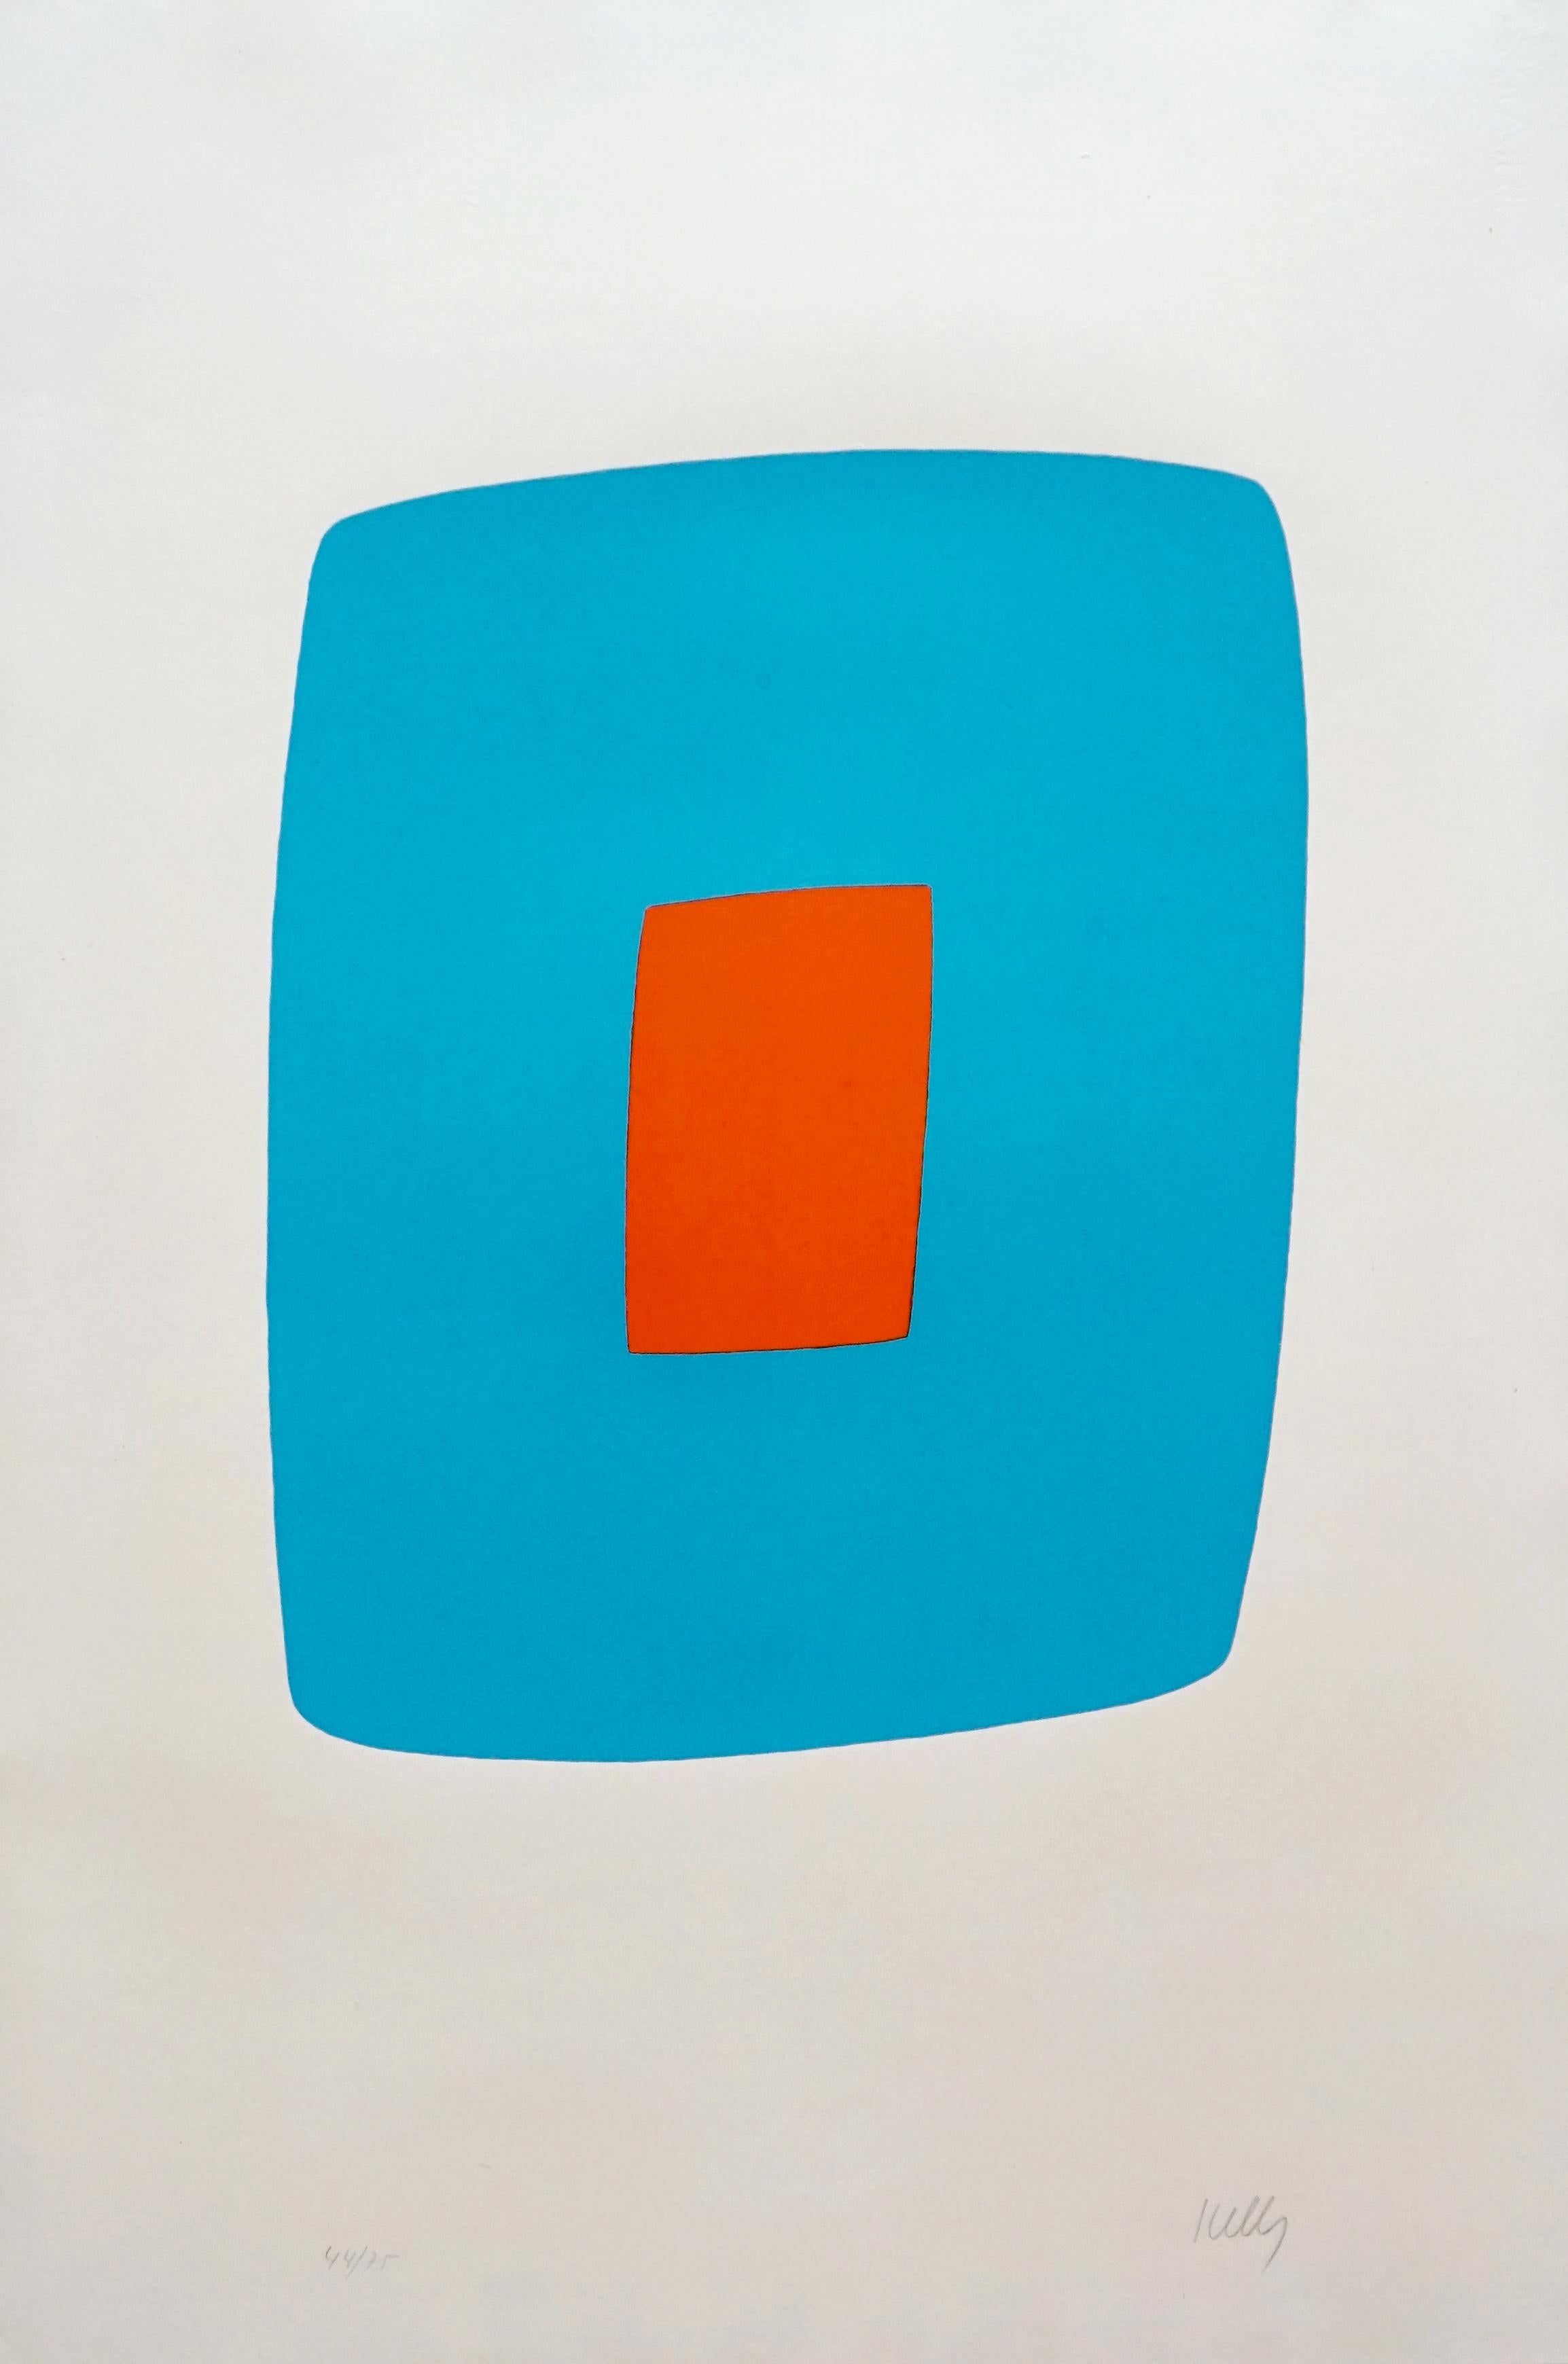 Abstract Print Ellsworth Kelly - Blue with Orange (Bleu clair avec orange) VI.11